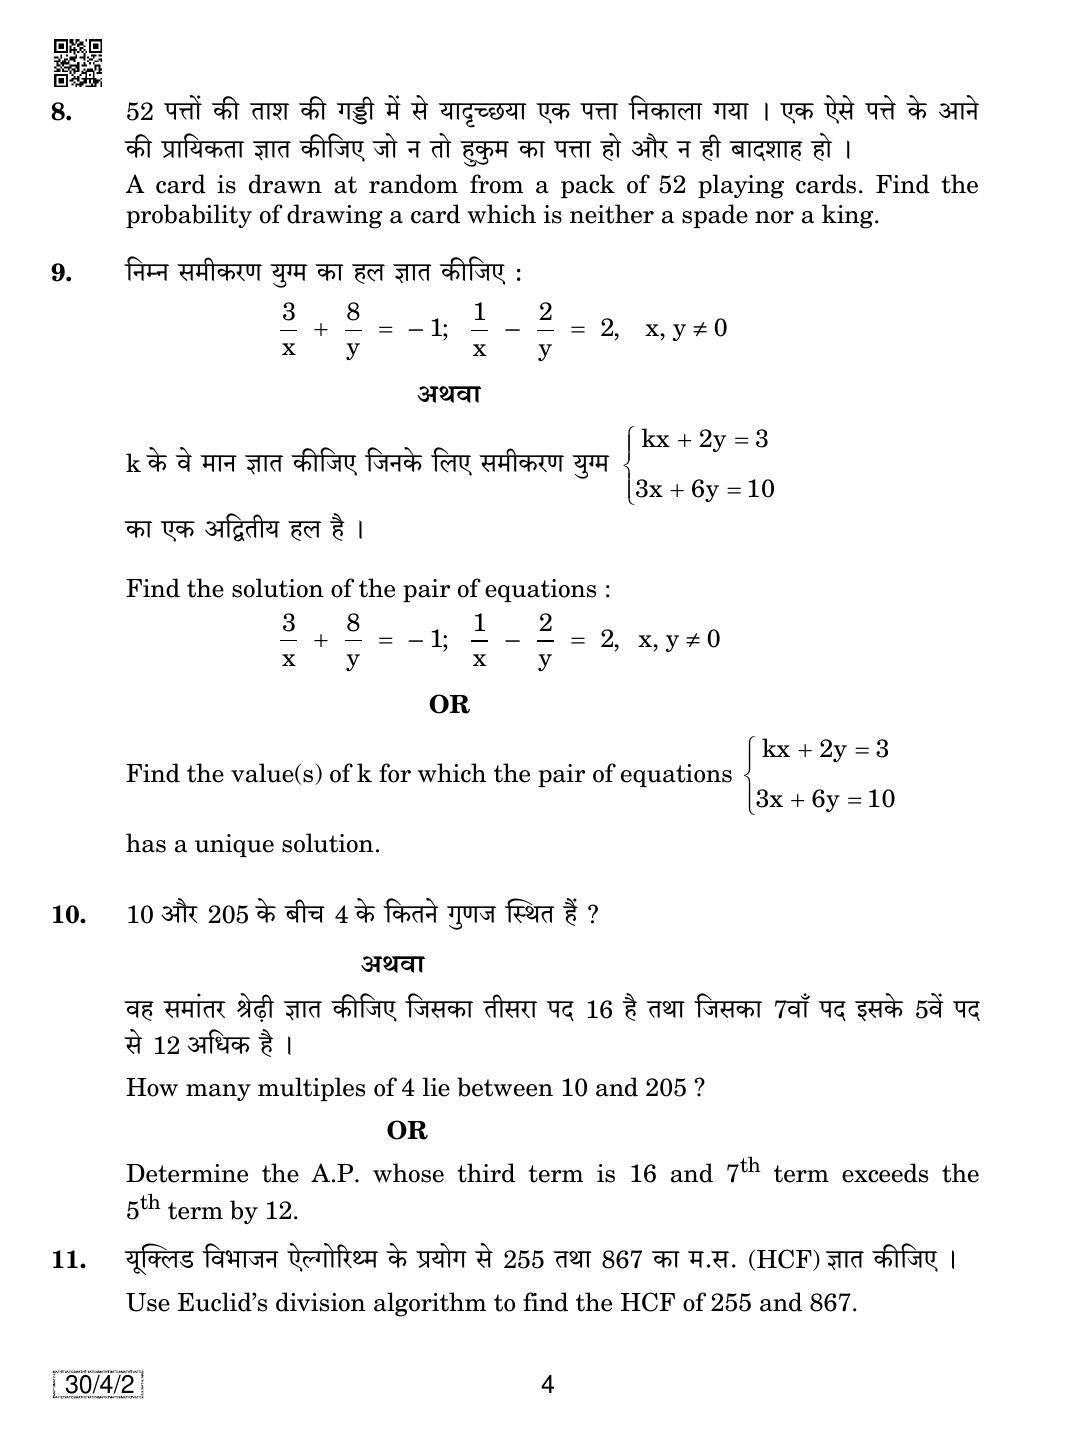 CBSE Class 10 Maths (30/4/2 - SET 2) 2019 Question Paper - Page 4